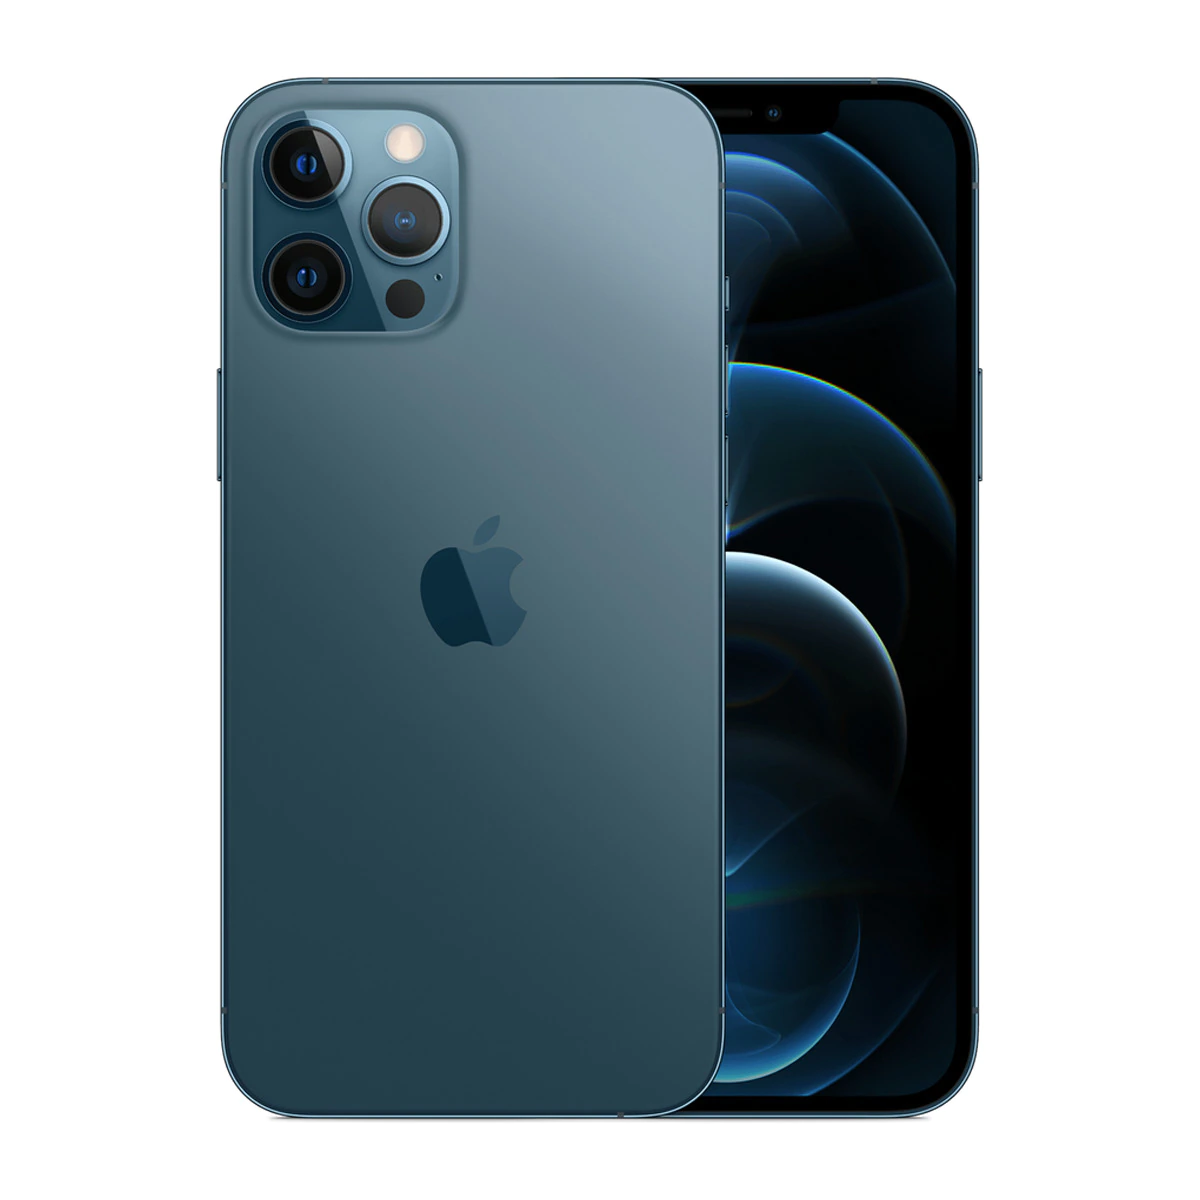 Apple iPhone 12 Pro Max 256 GB Pacific Blue móvil libre